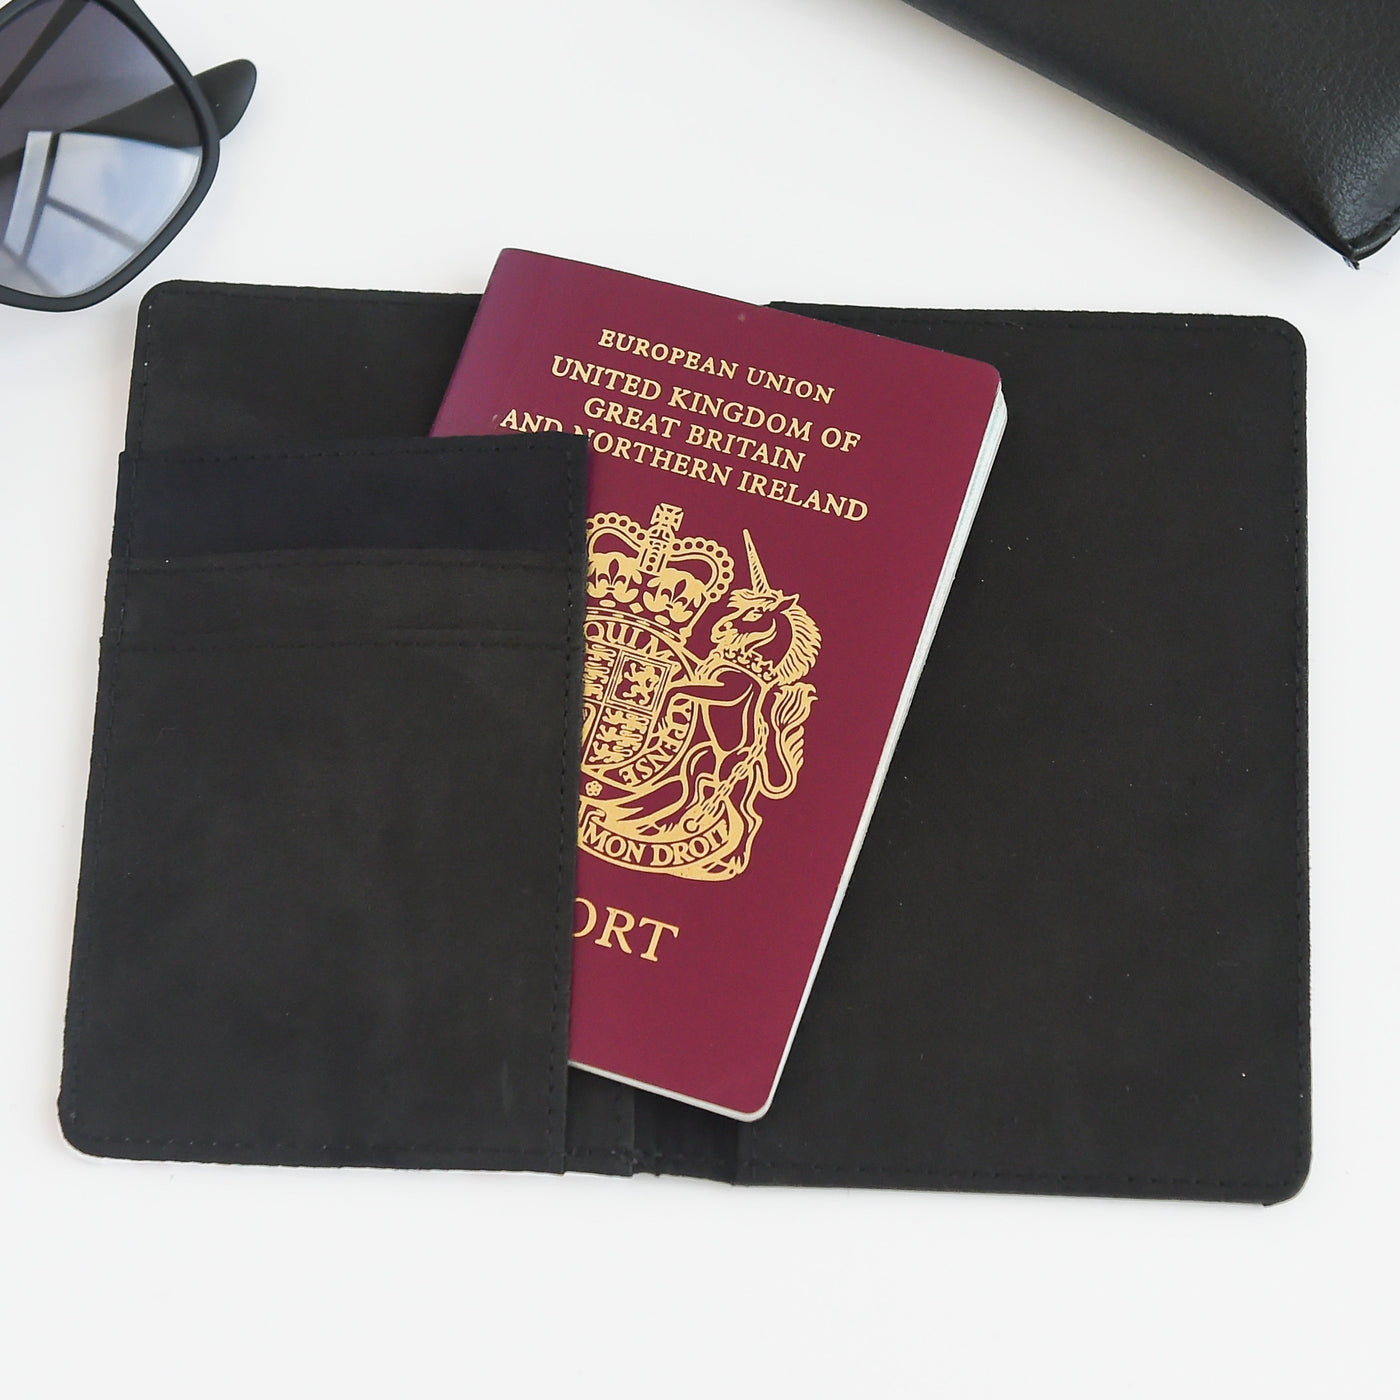 Personalised Passport Holder | Monogram in Caramel